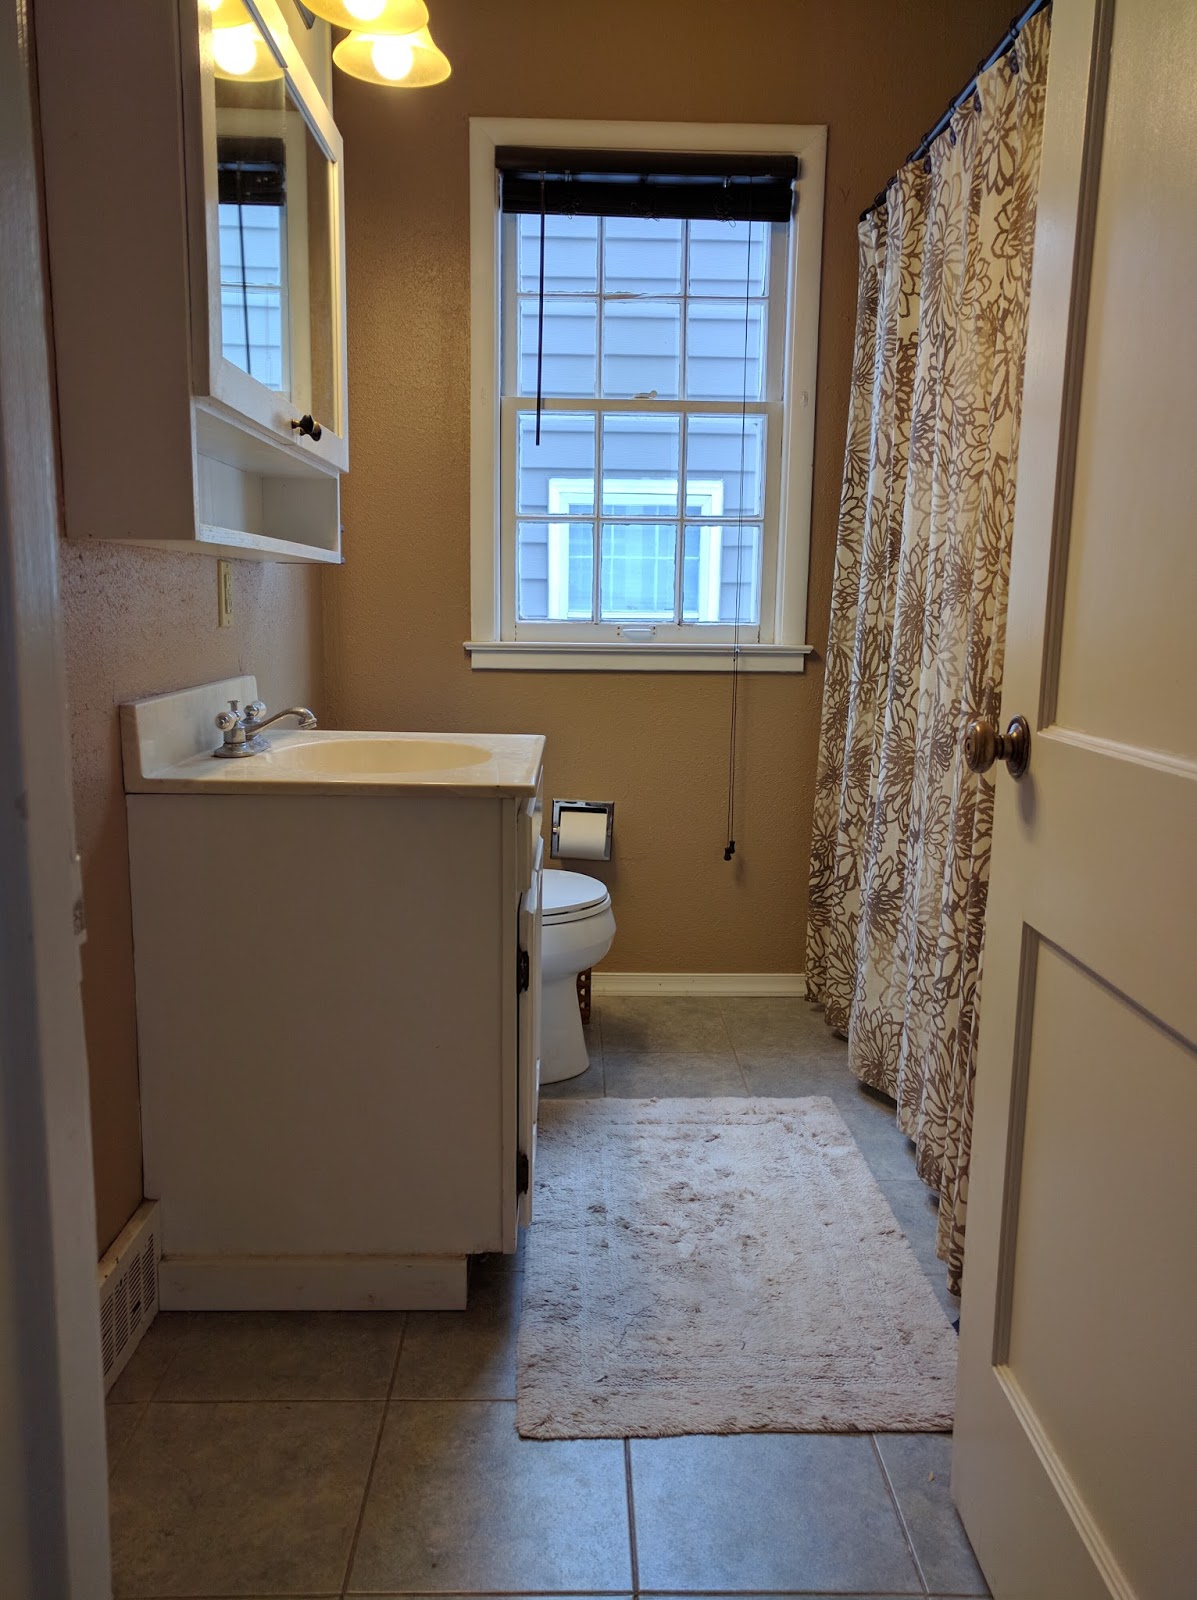 KRUSES WORKSHOP 1930s Cottage Bathroom Remodel